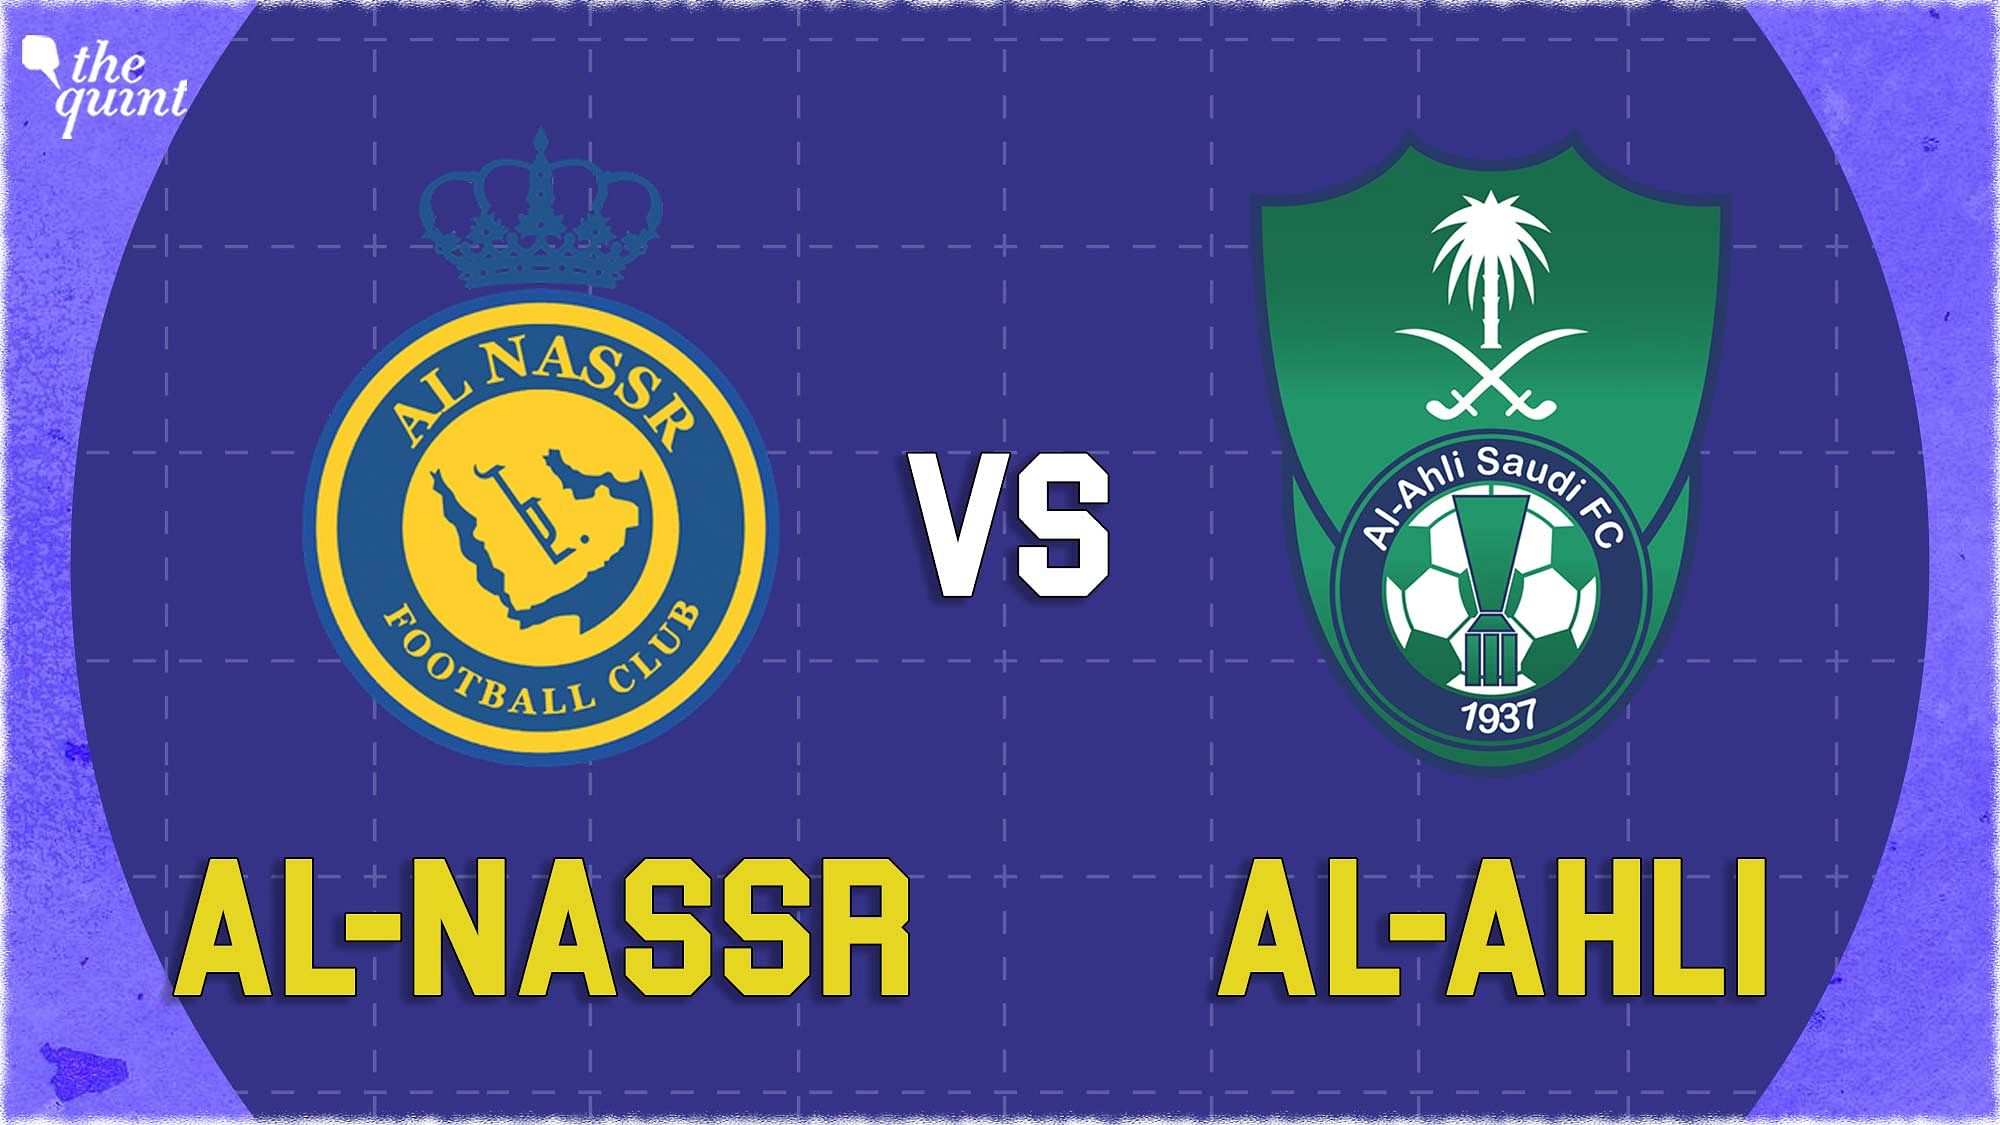 Al Nassr vs Al Ahli Saudi Pro League Football Date, Time, Venue, Live Streaming, and Telecast in India